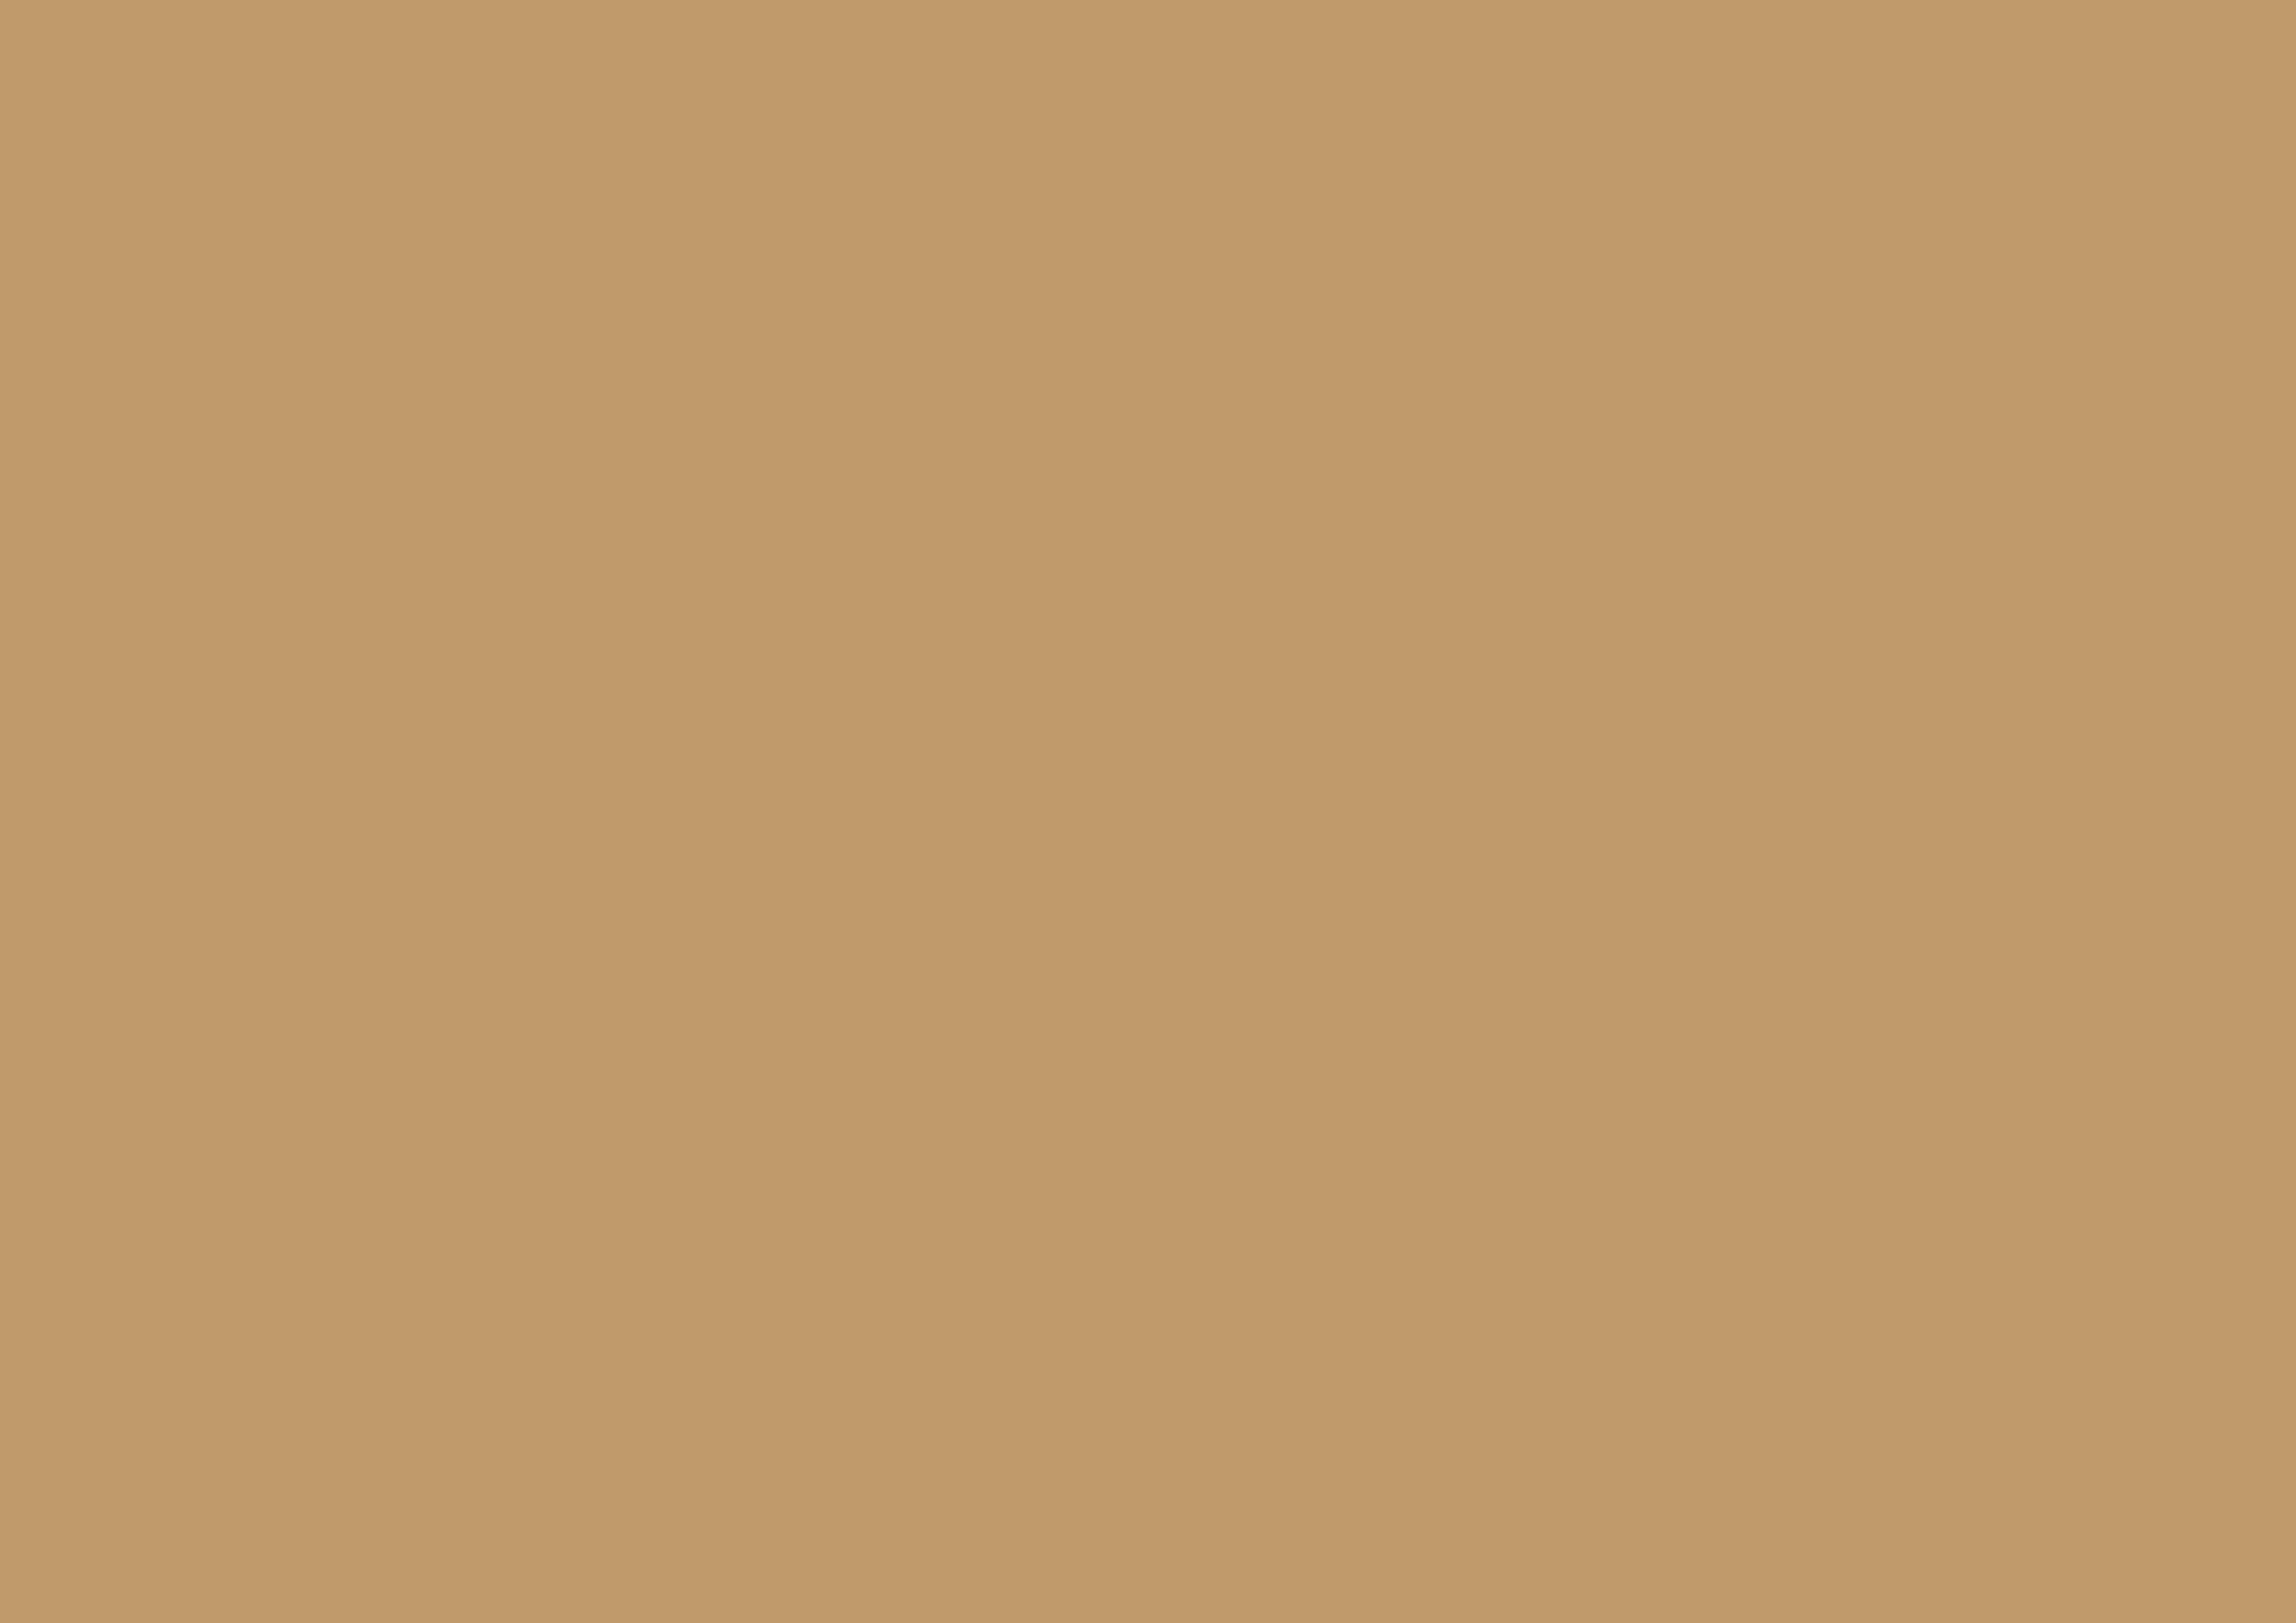 3508x2480 Camel Solid Color Background